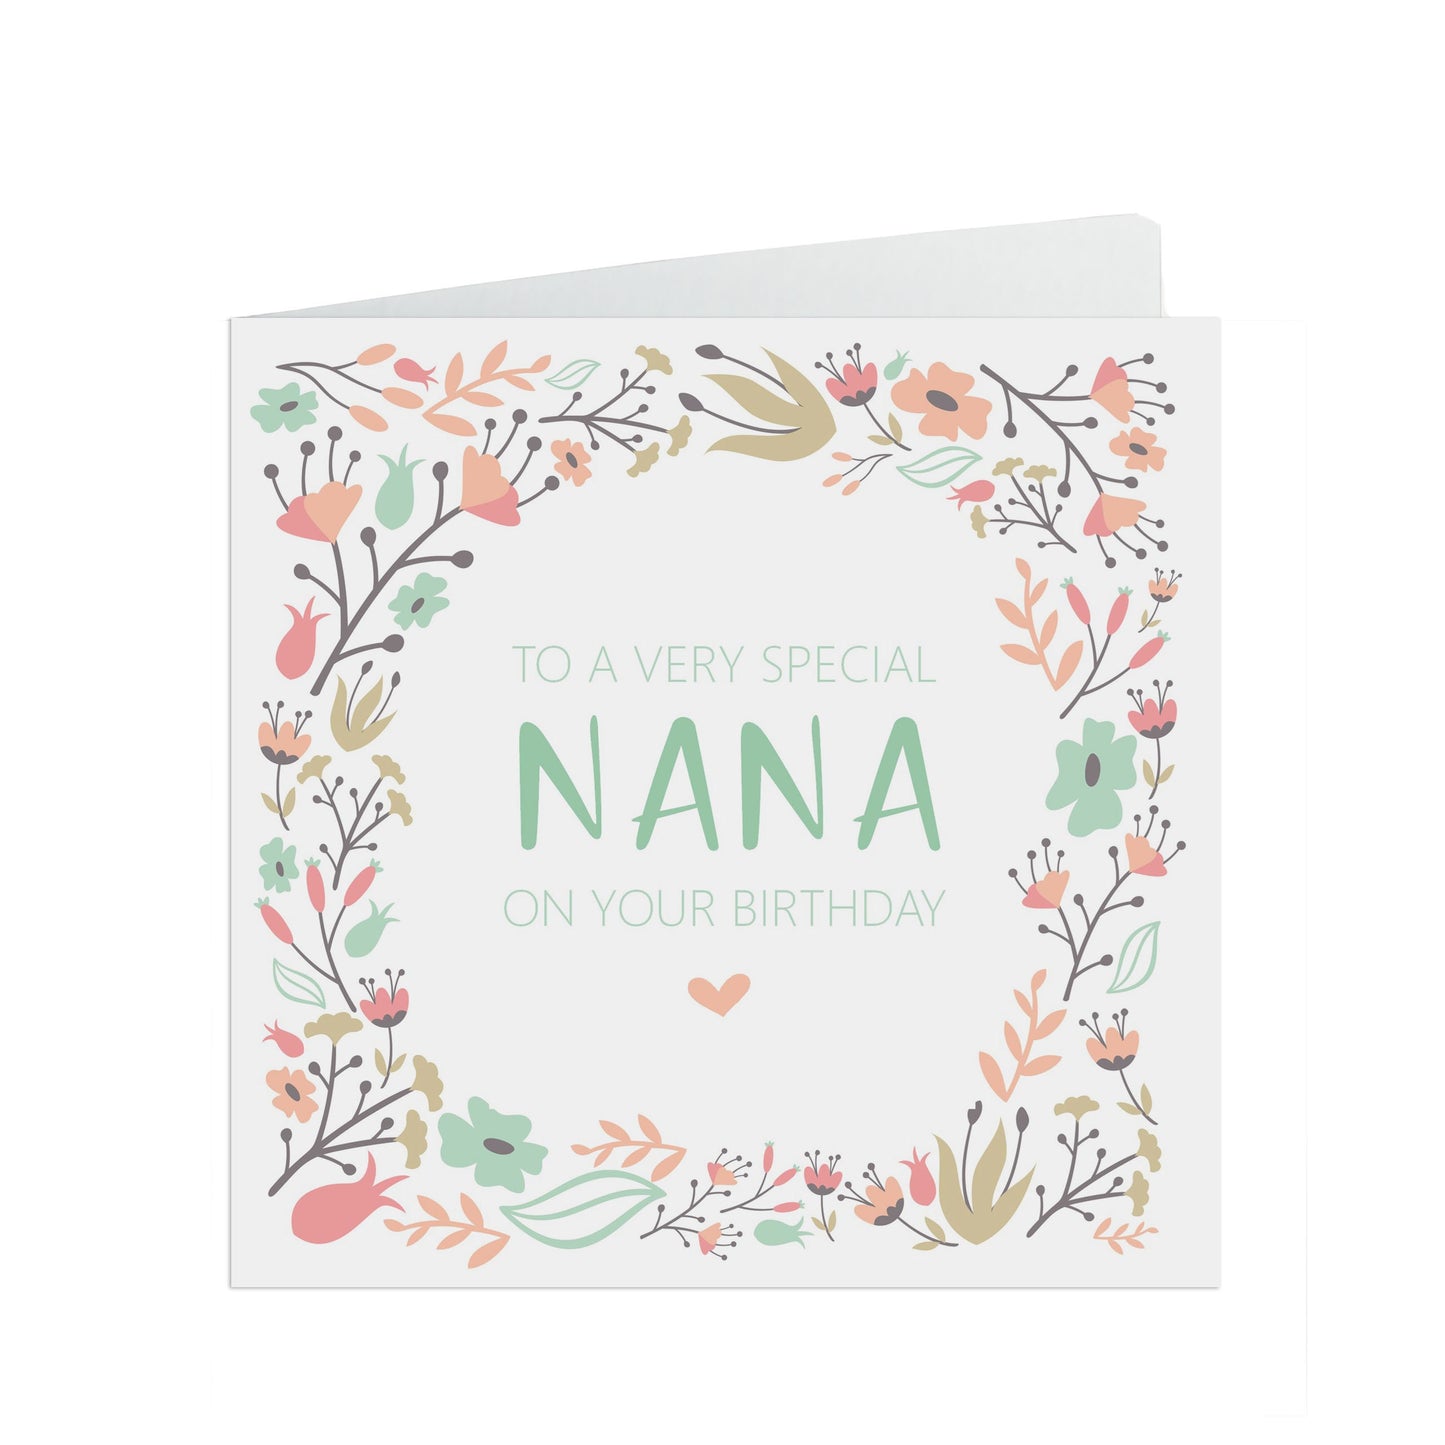 Nana Birthday Card, Sage & Peach Flower Design